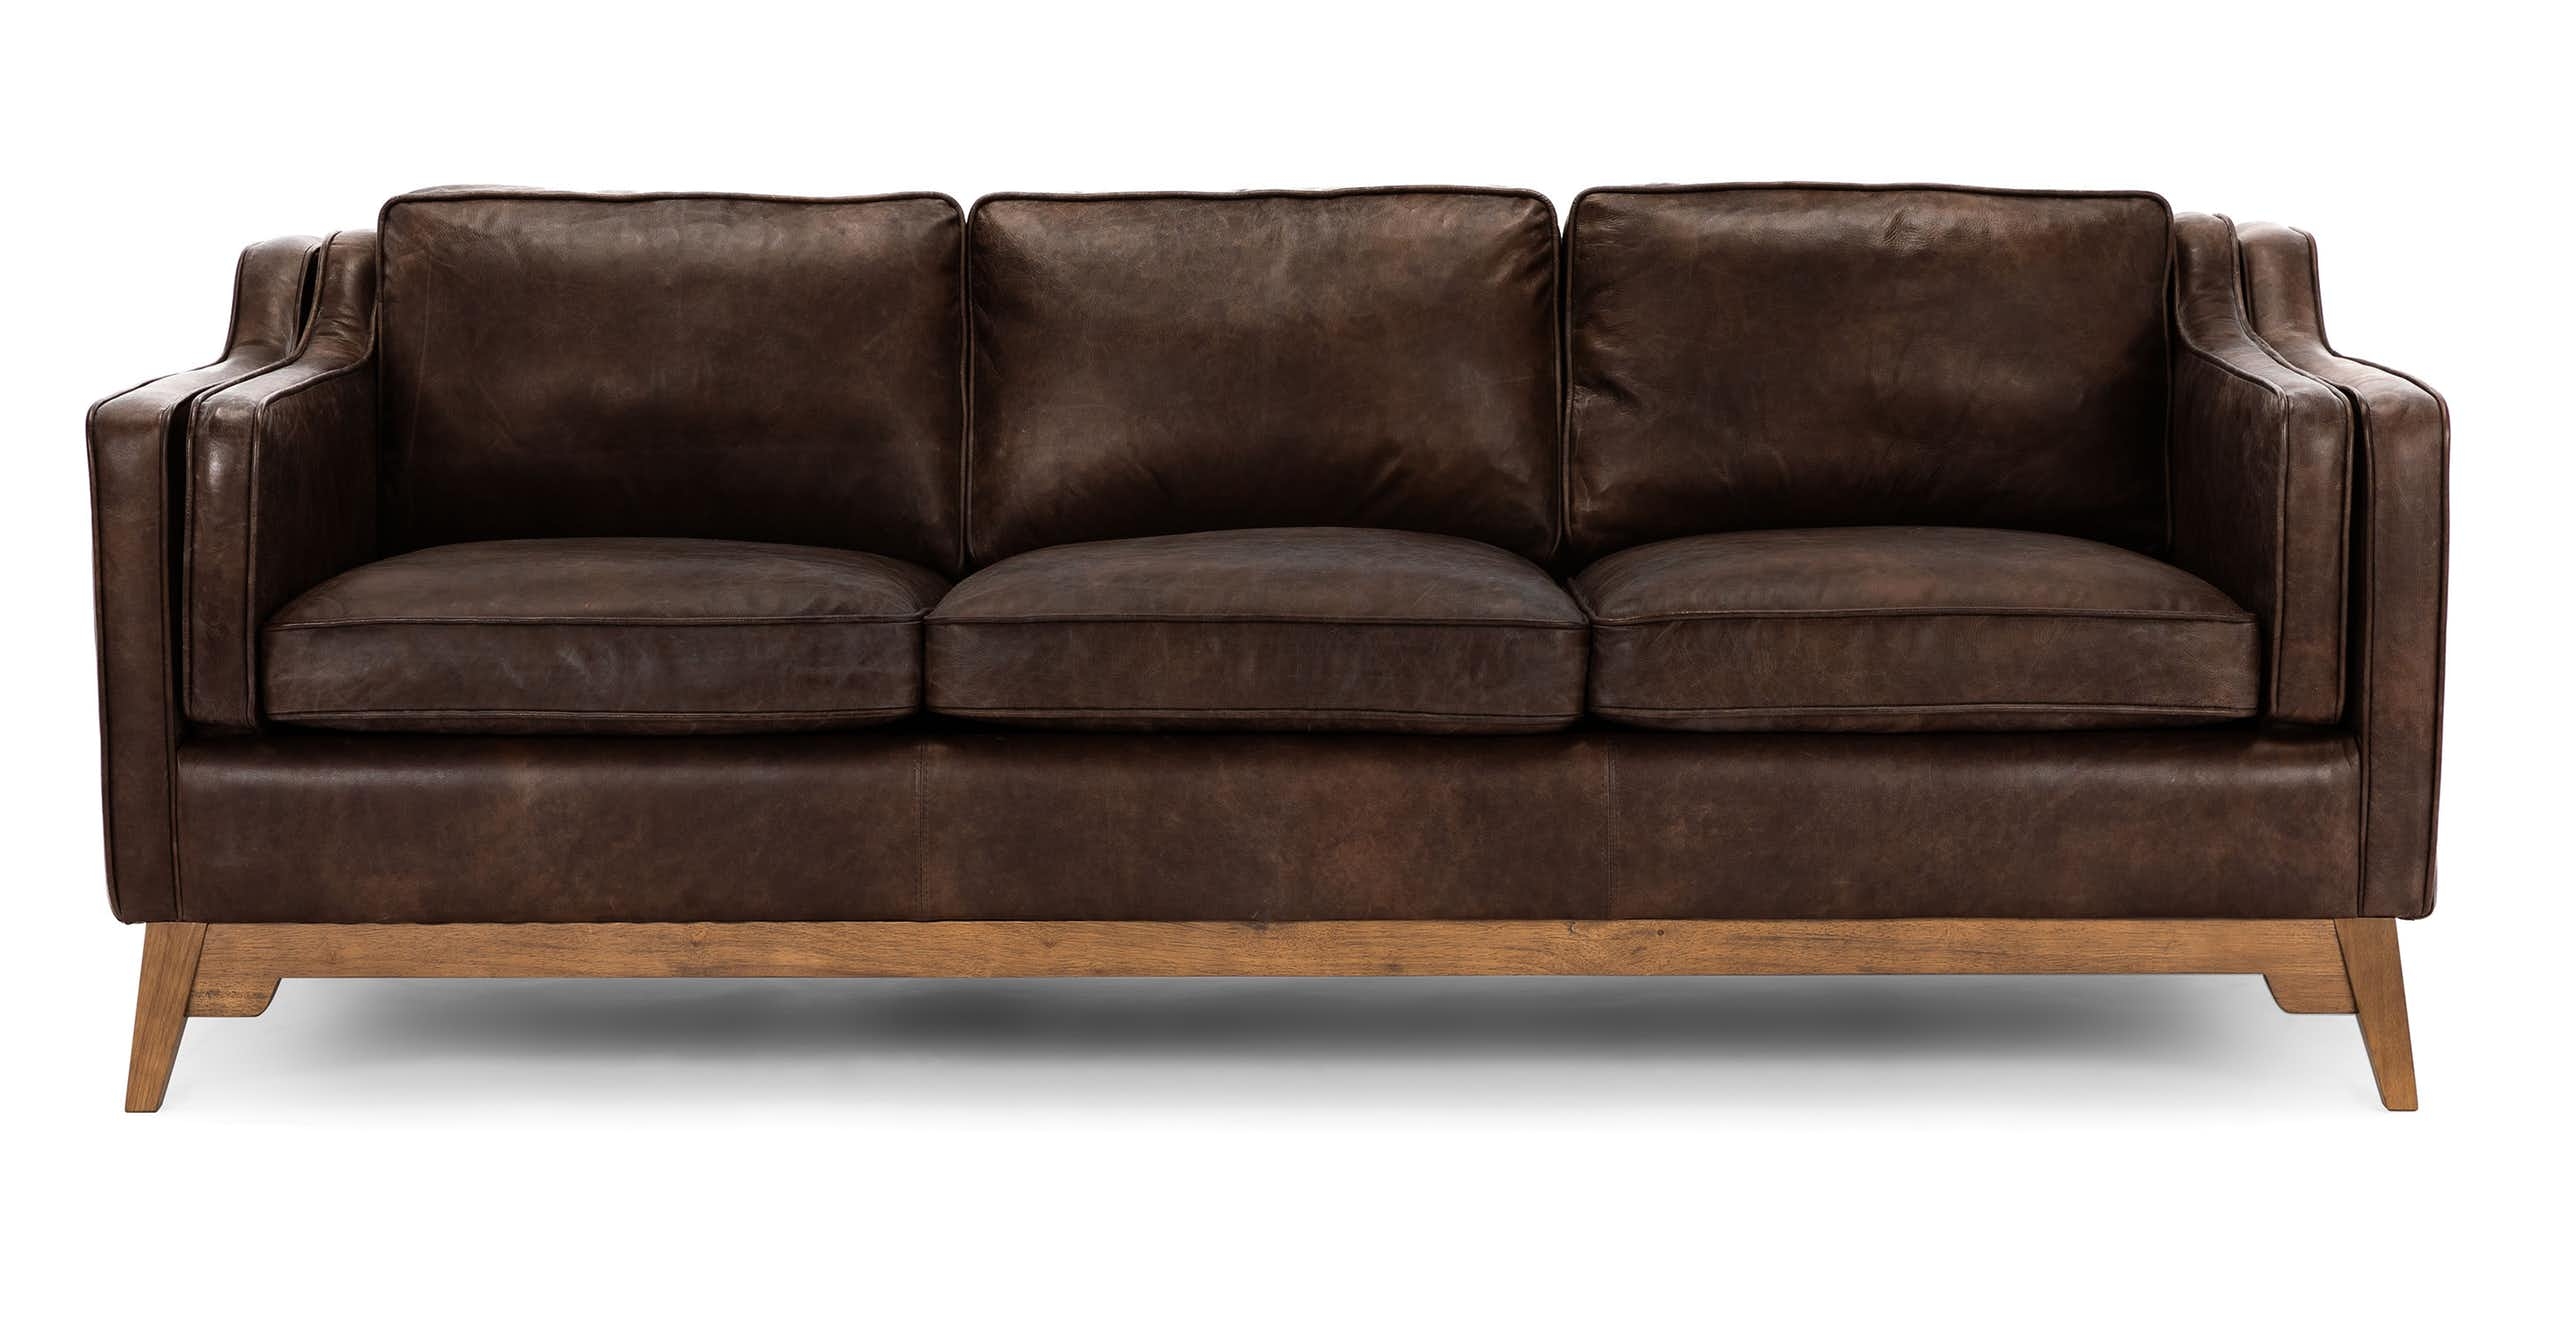 Worthington Sofa - OXFORD BROWN AND HONEY OAK - Image 0